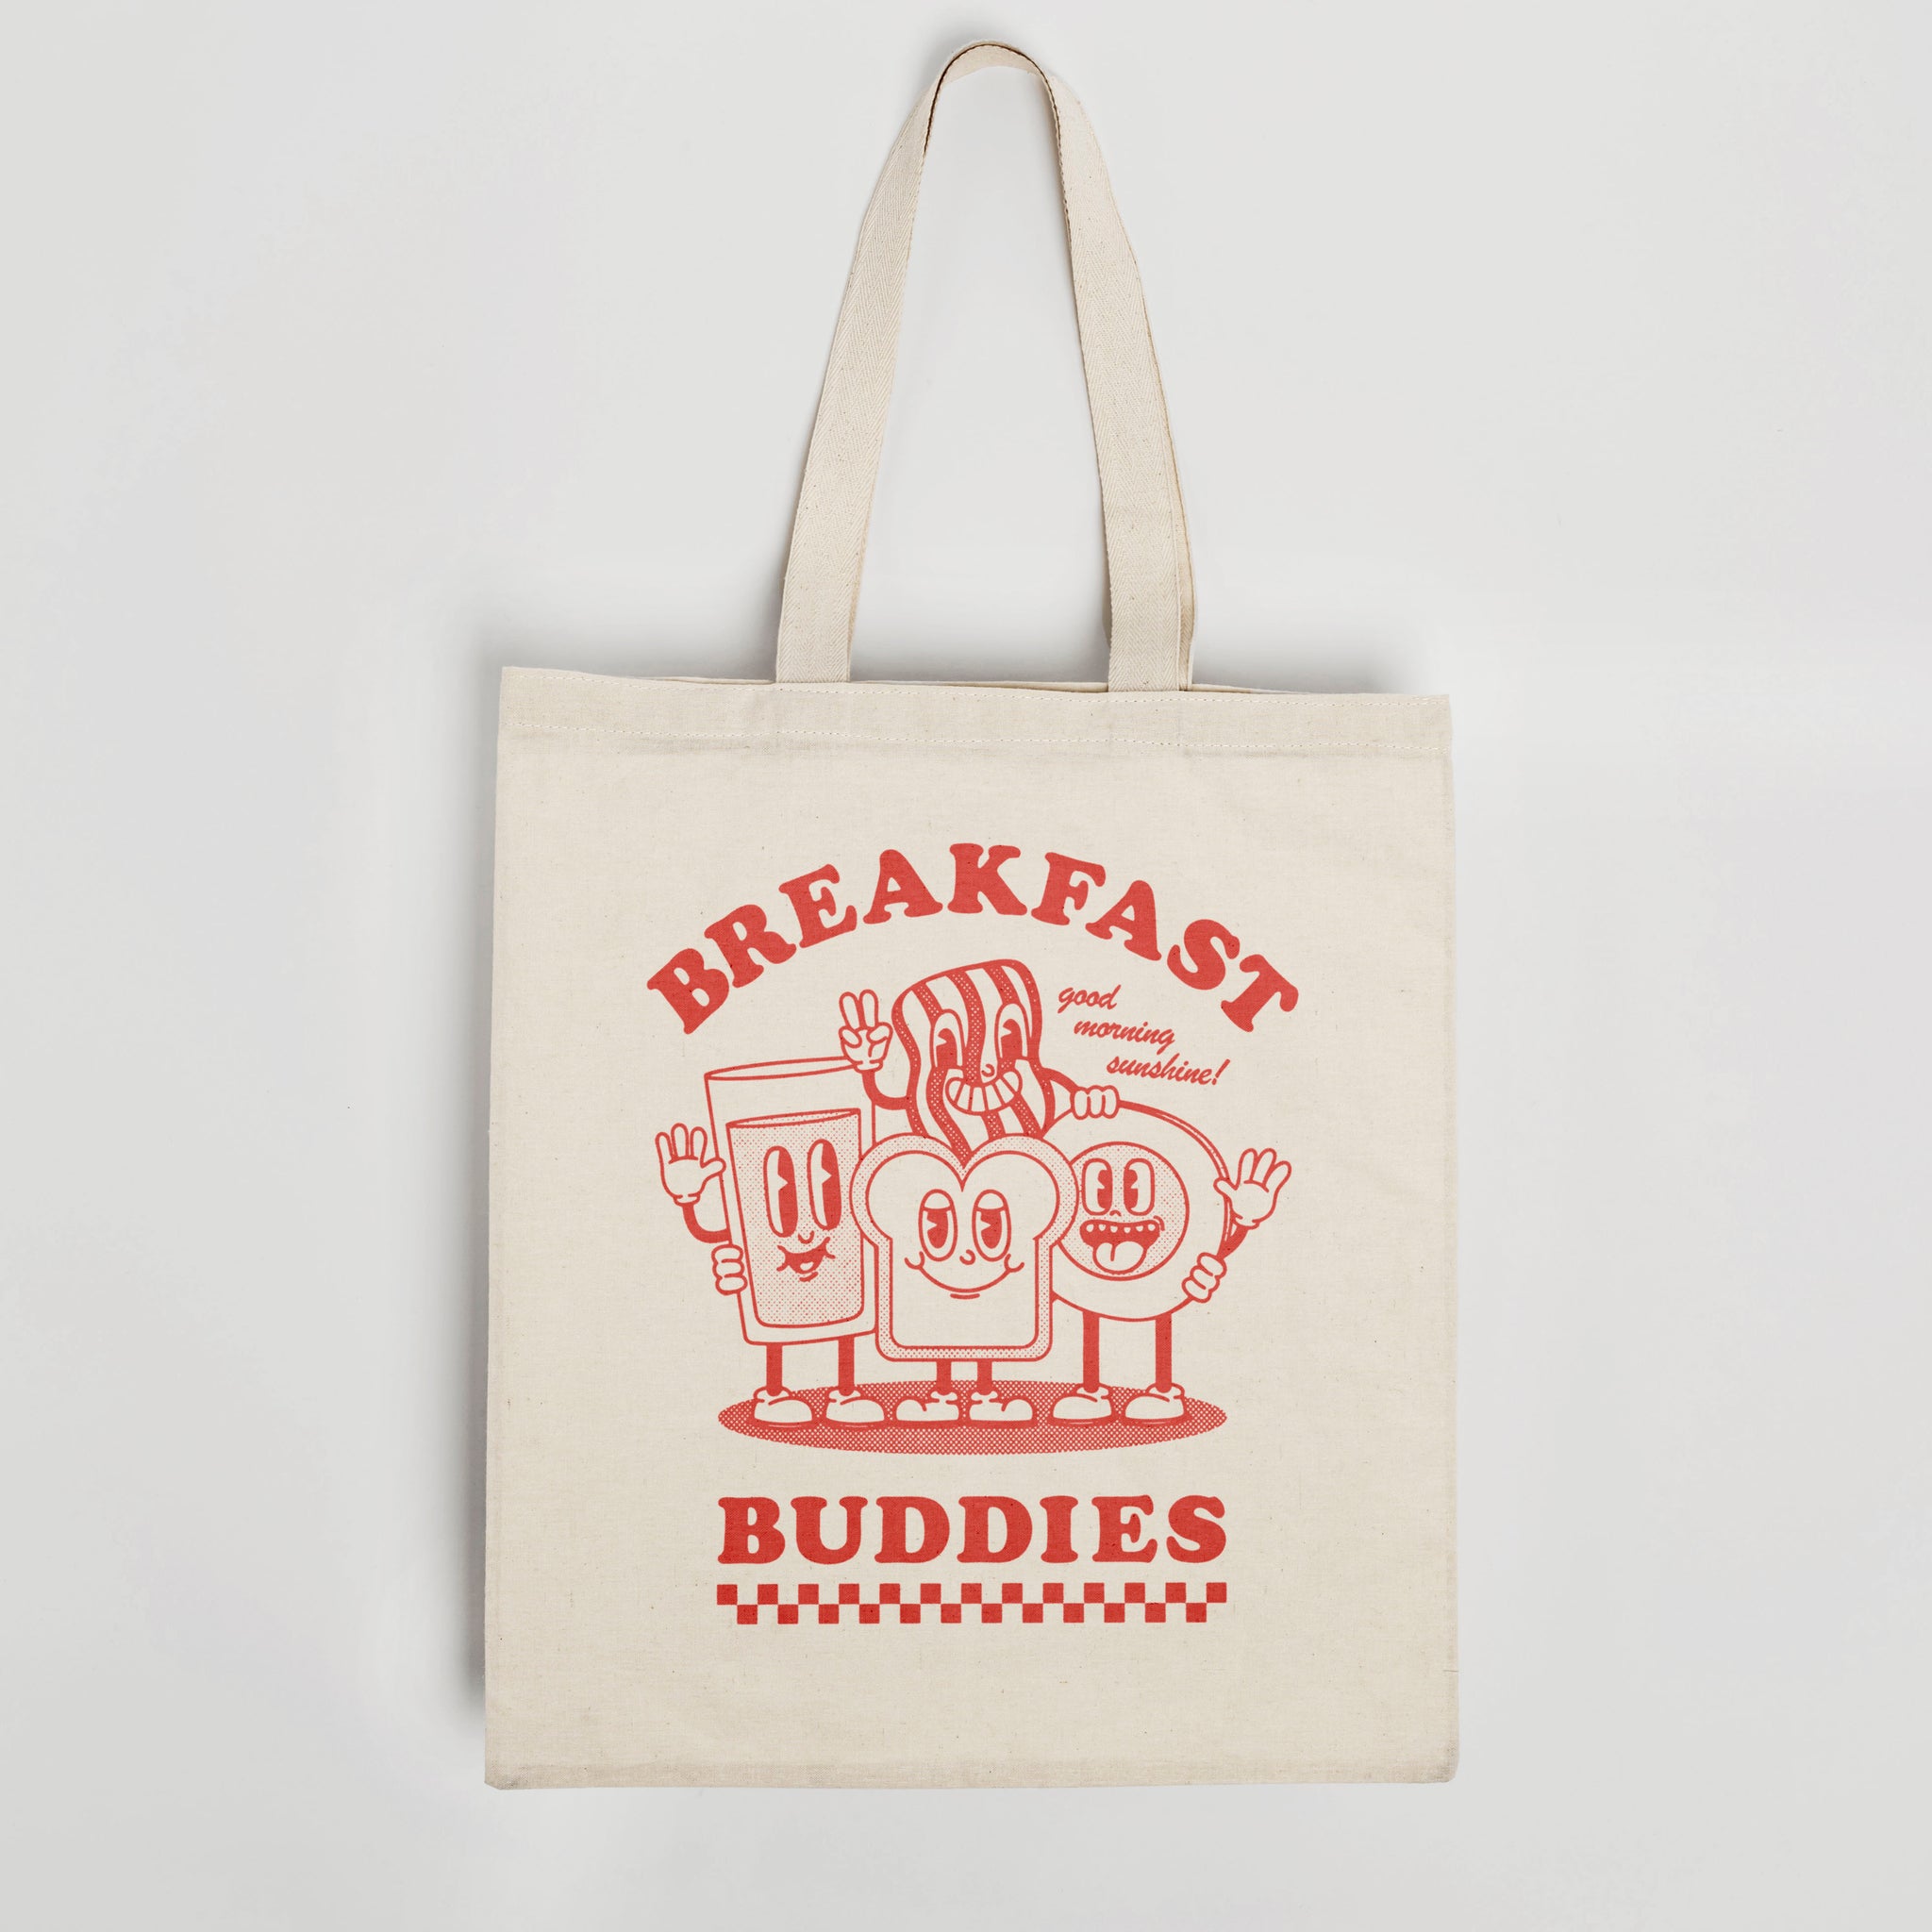 'Breakfast Buddies' organic cotton canvas tote bag